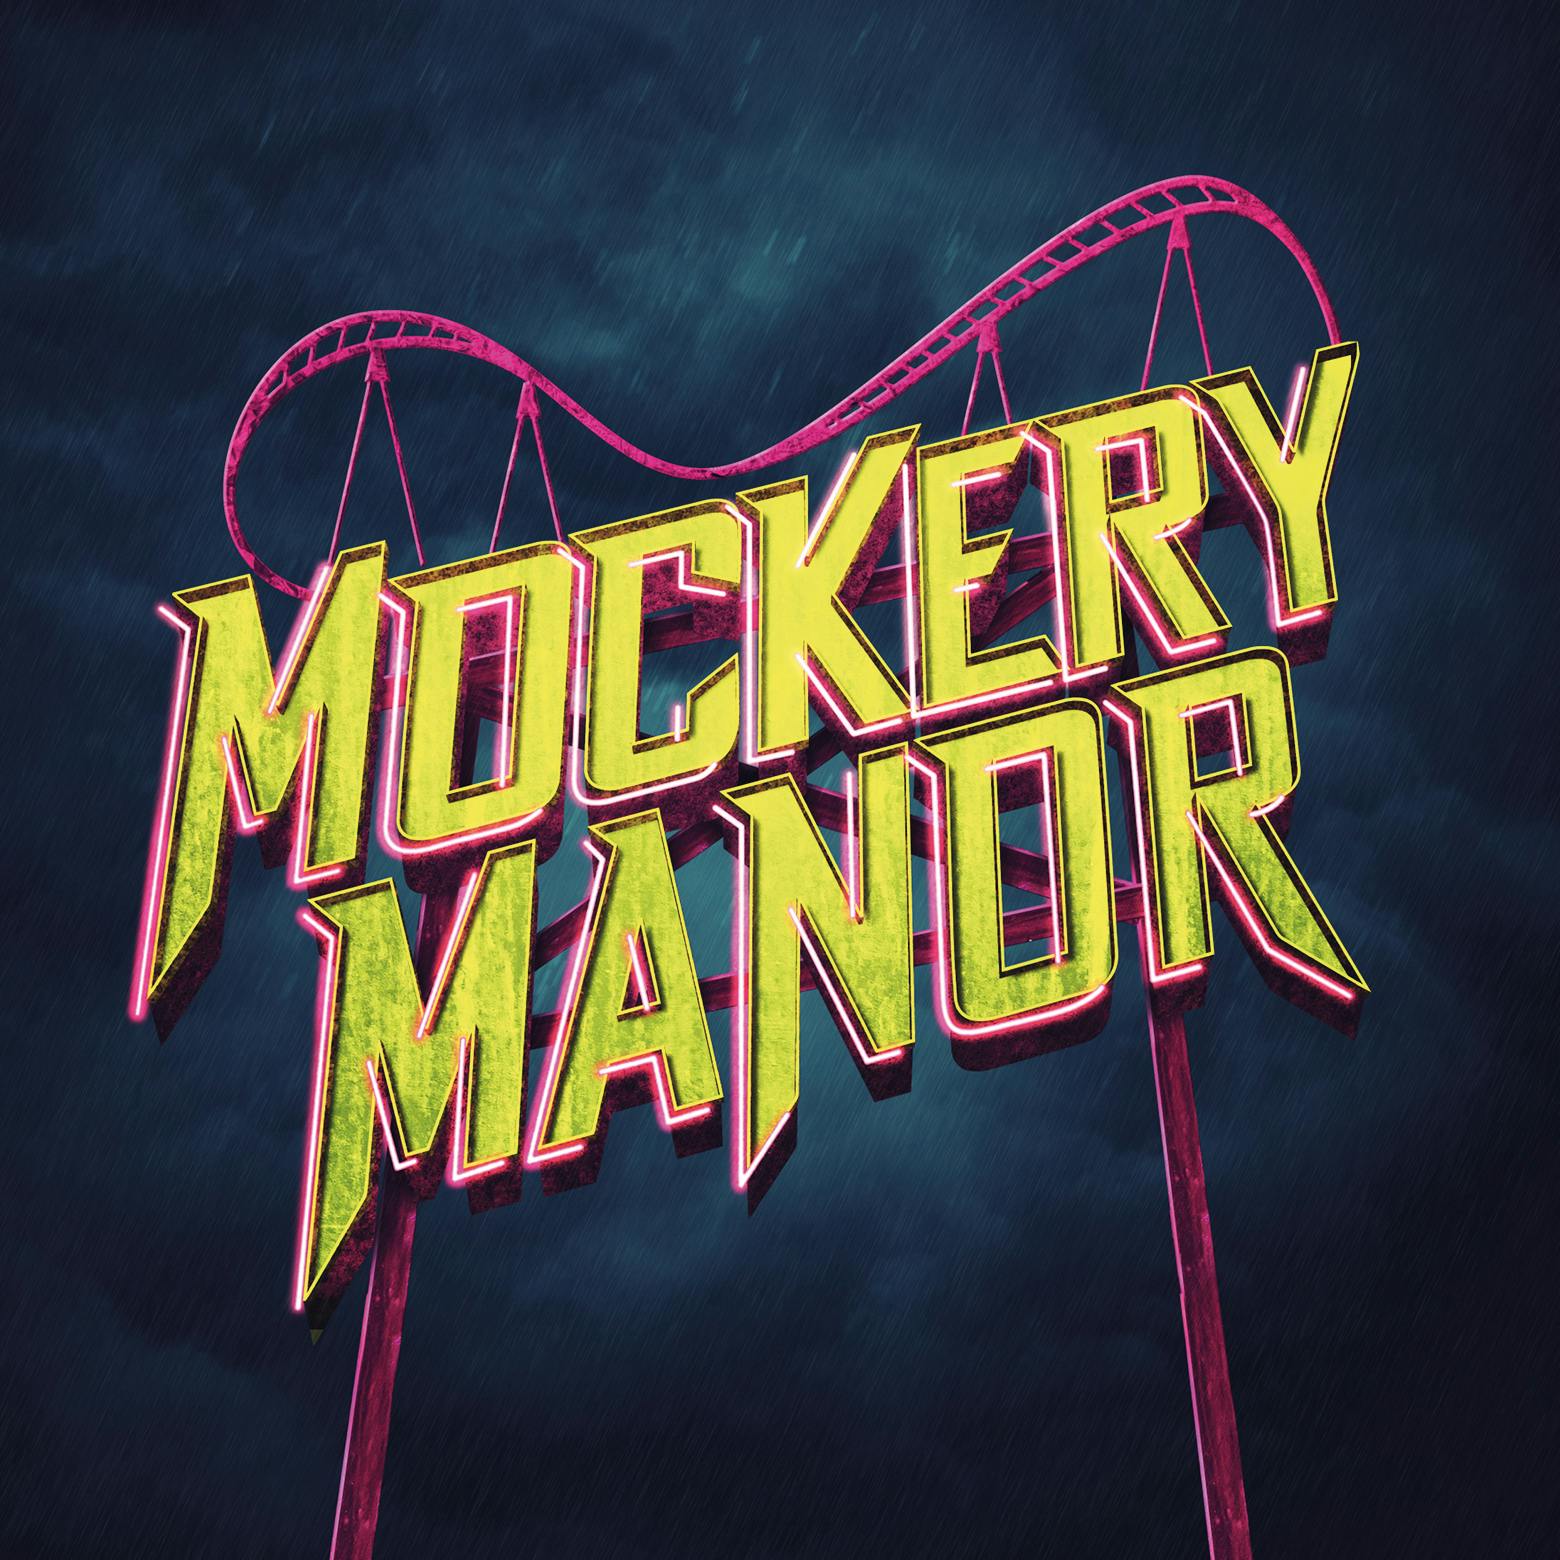 Favorite Shows: Mockery Manor